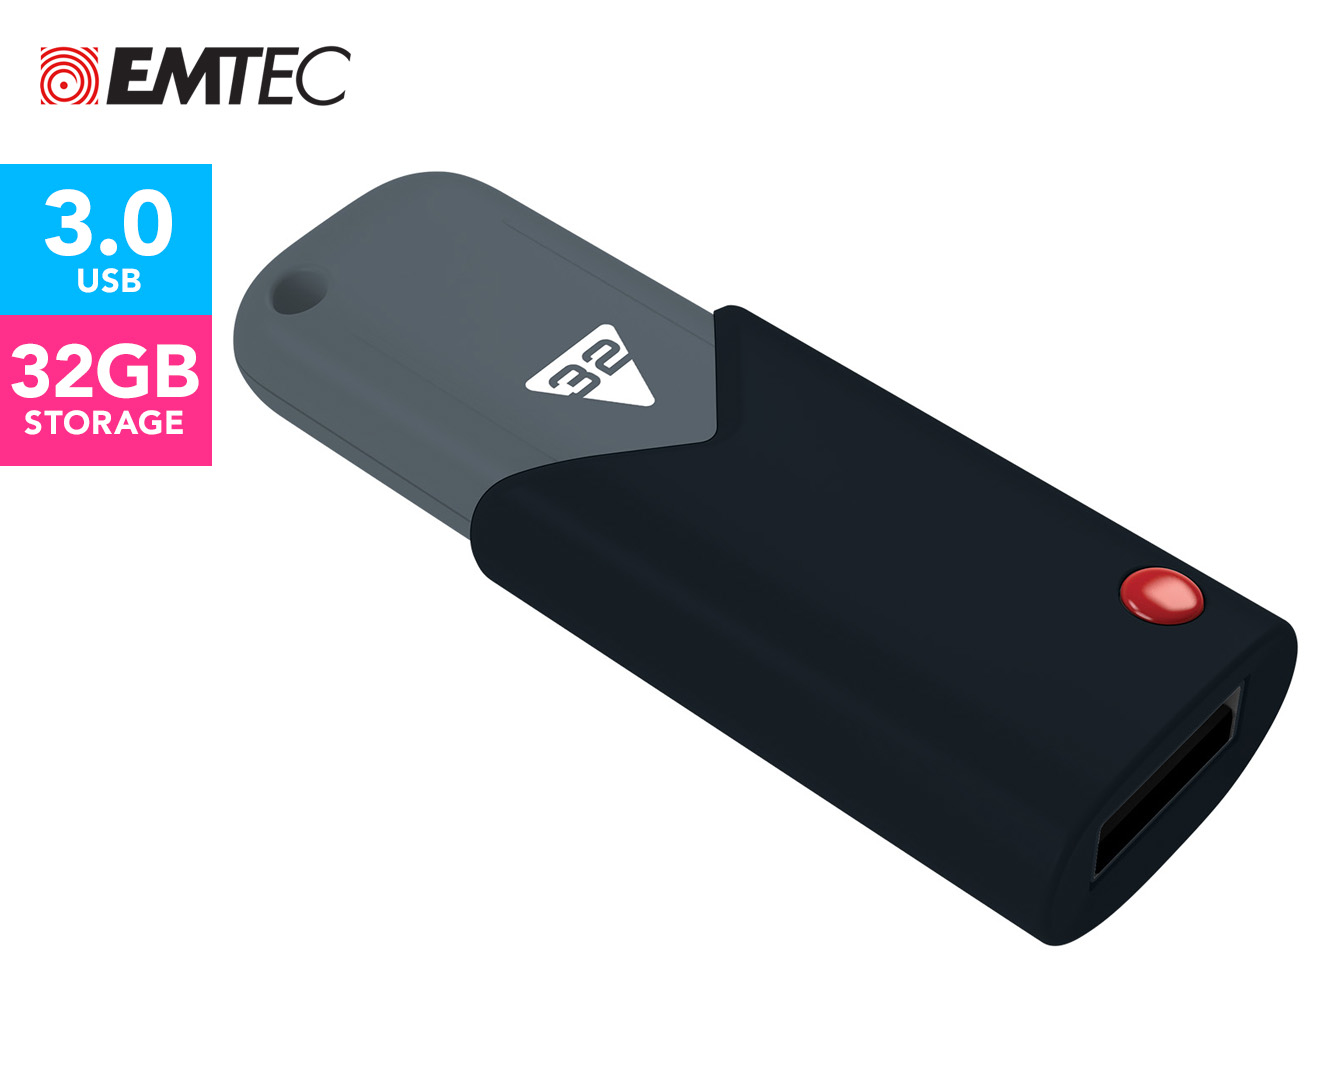 EMTEC B100 USB 3.0 32GB Flash Drive - Black/Grey